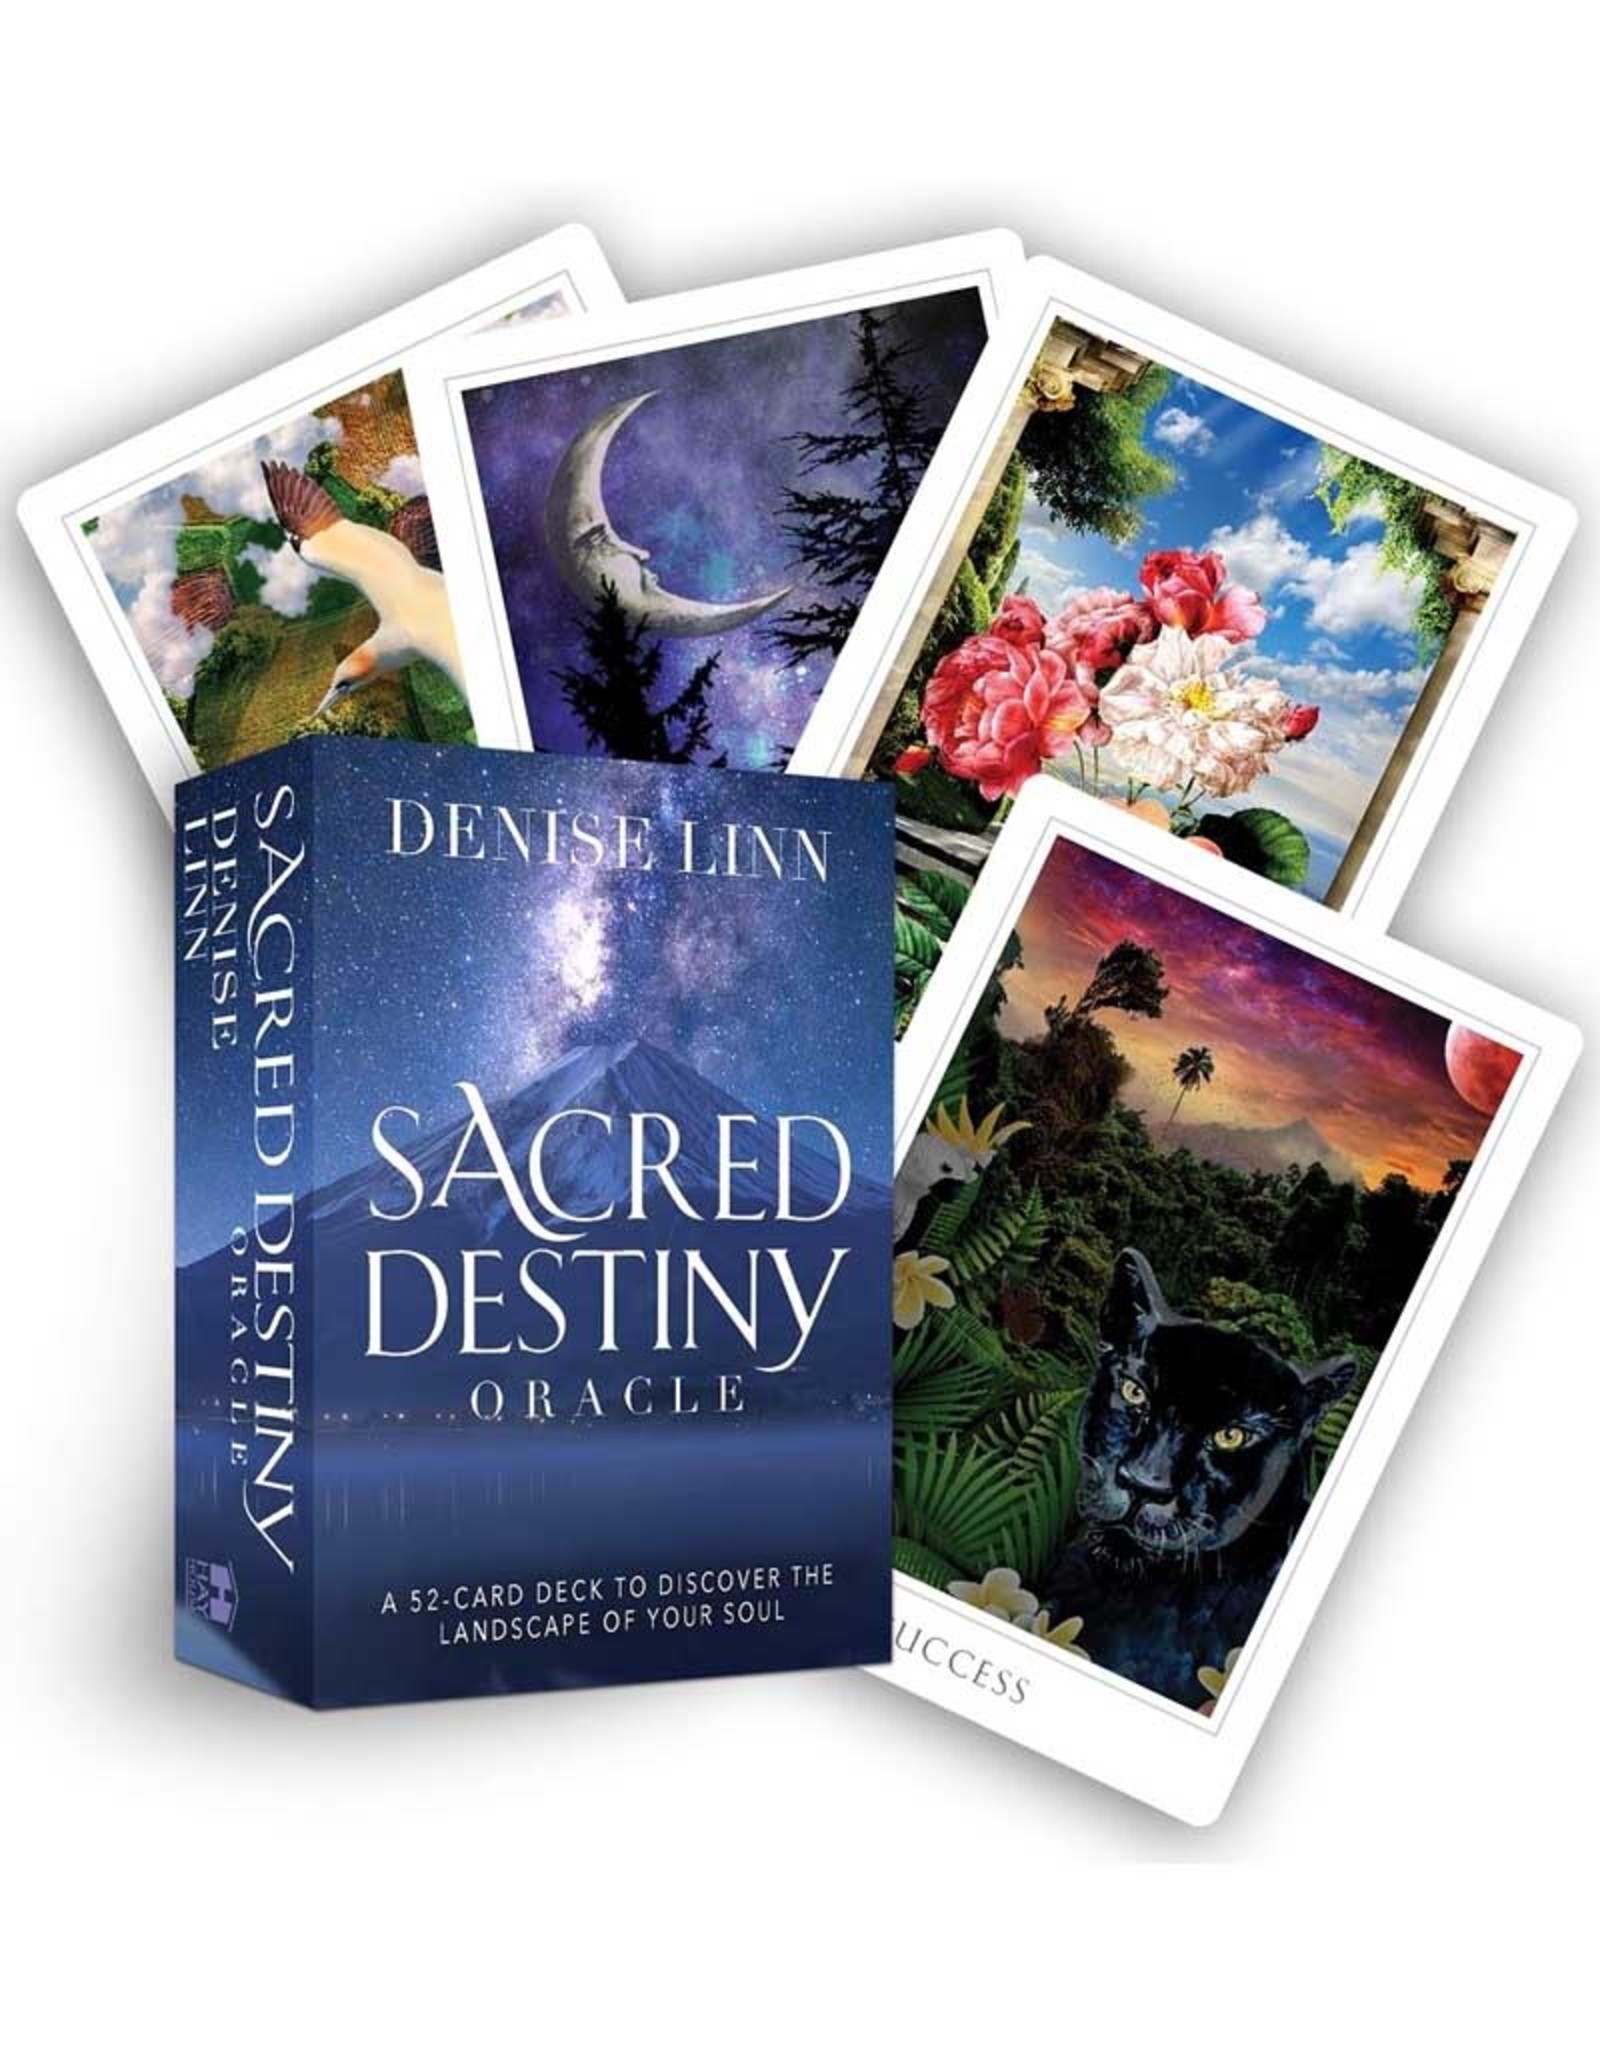 Denise Linn Sacred Destiny Oracle by Denise Linn